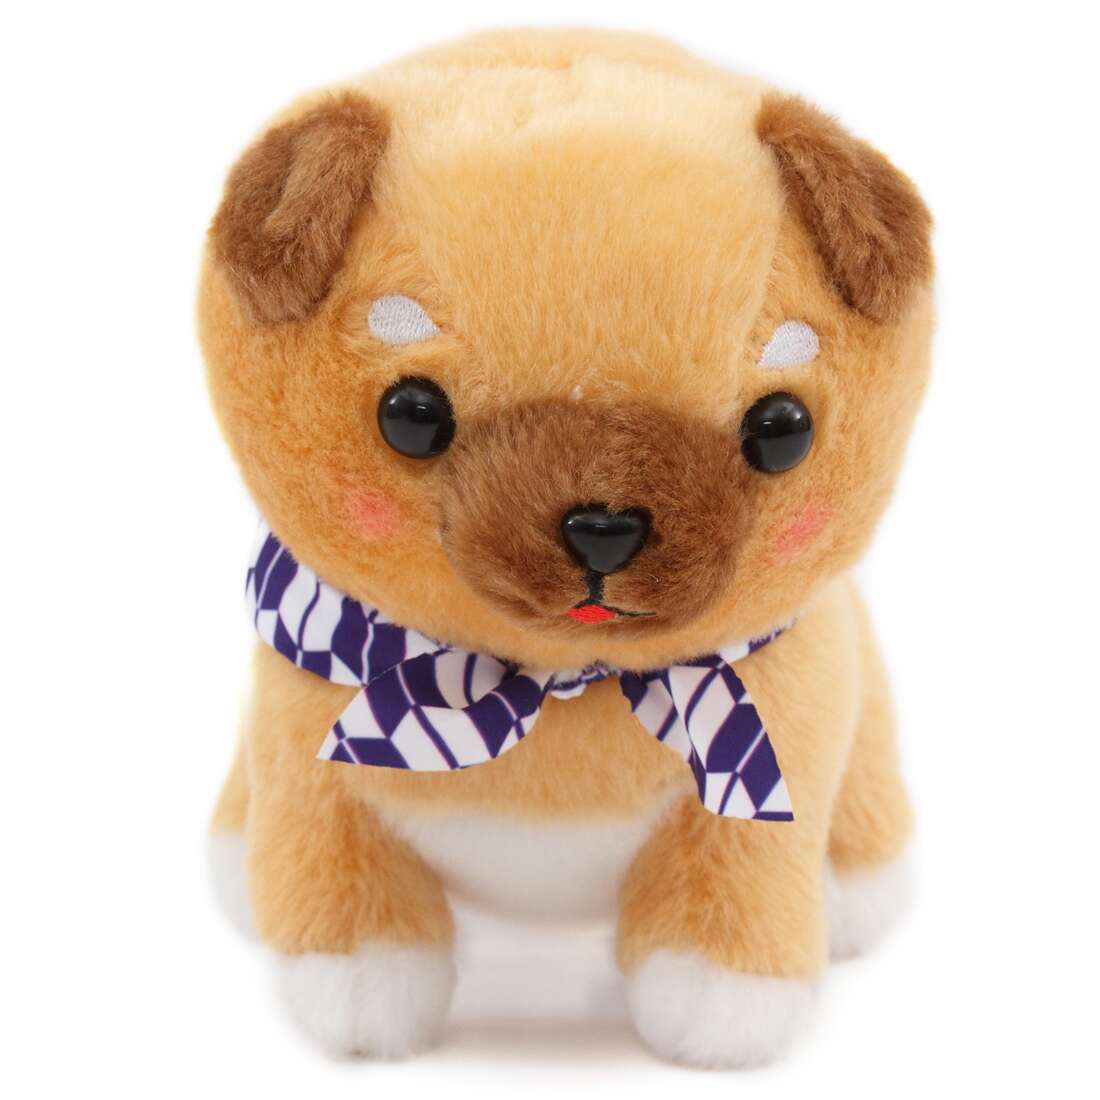 cute dog stuffed animals